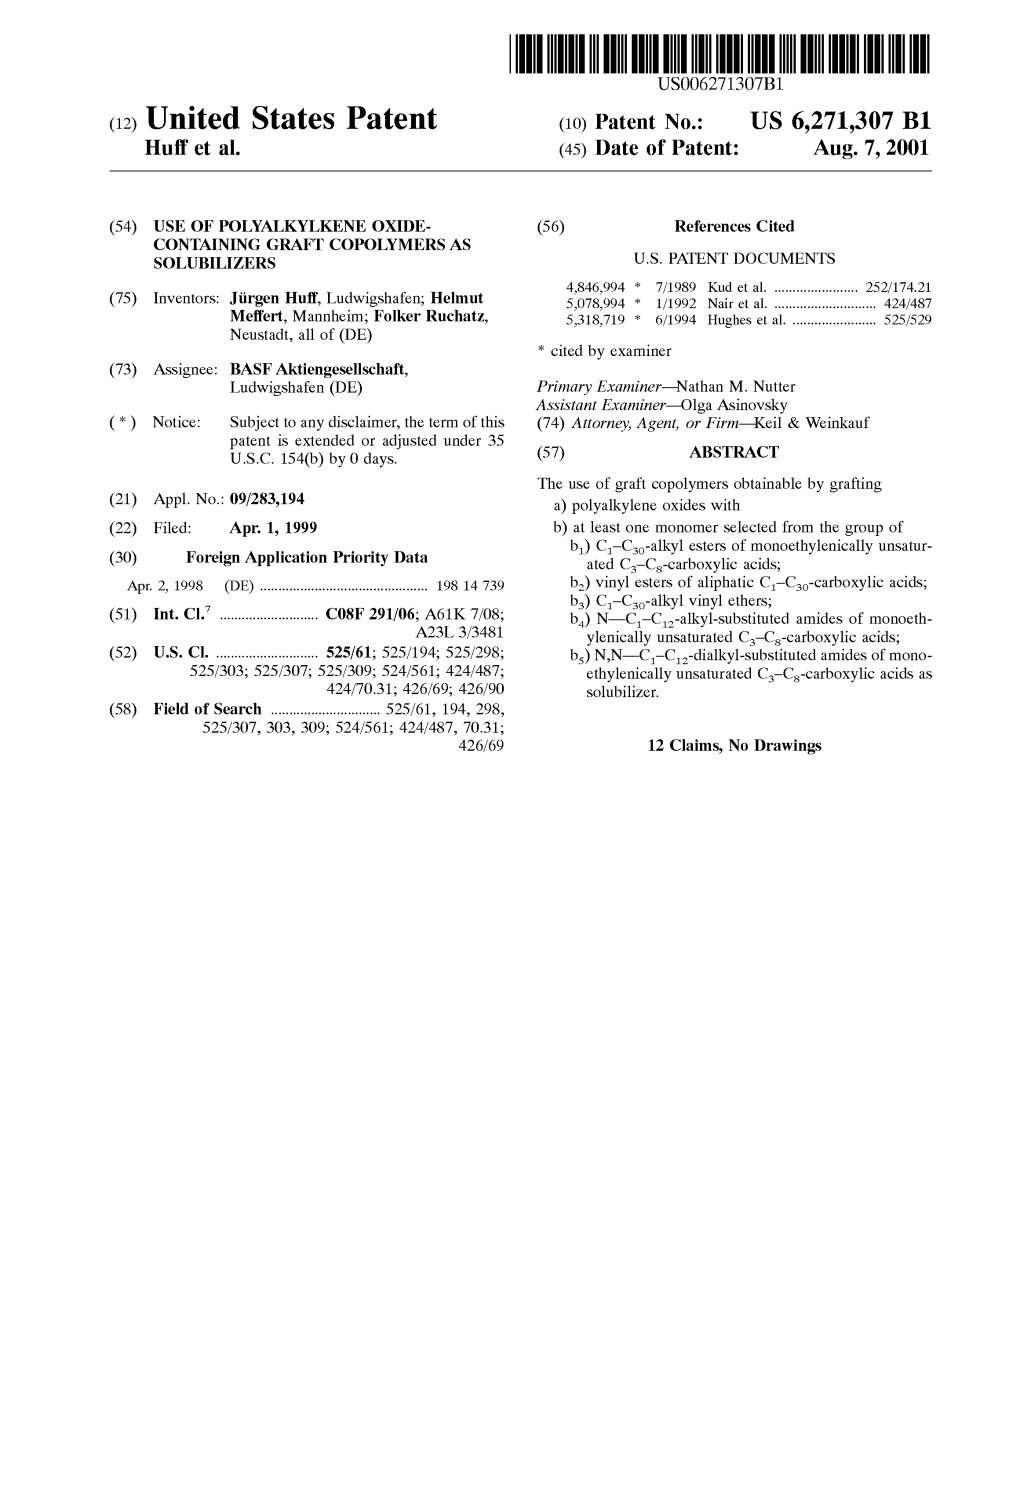 (12) United States Patent (10) Patent No.: US 6,271,307 B1 Huff Et Al